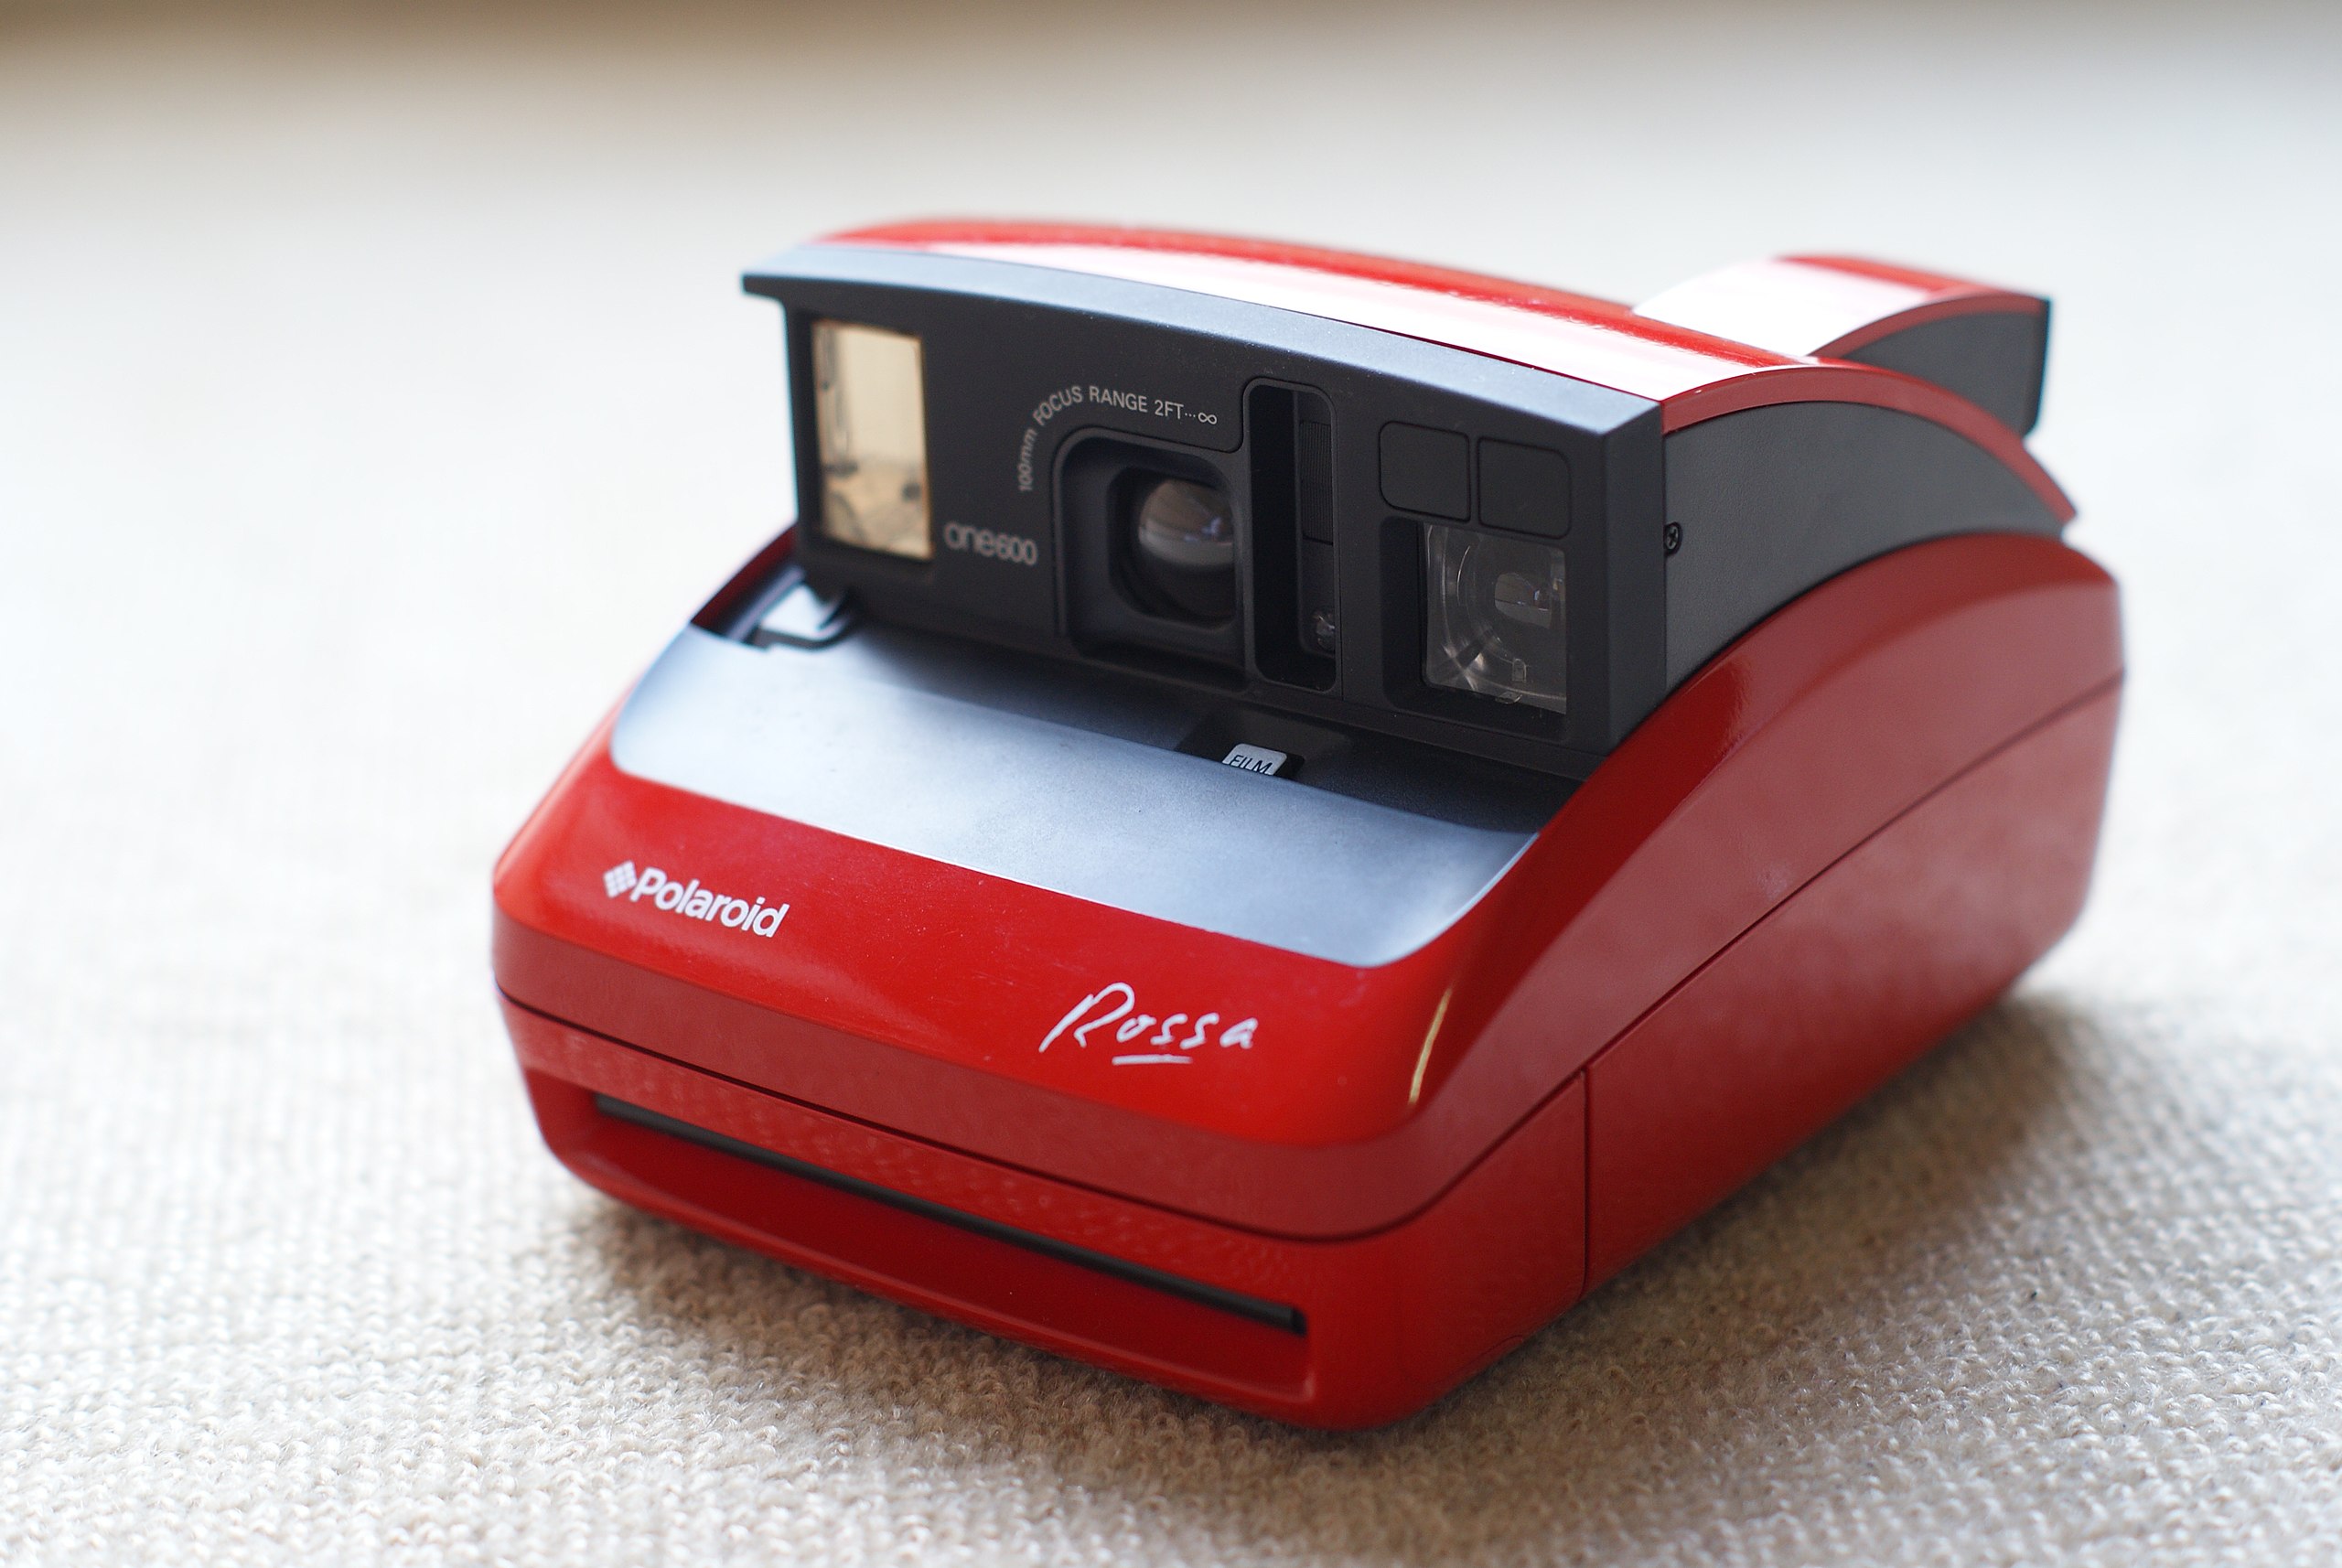 File:Polaroid Rossa 01.jpg - Wikimedia Commons